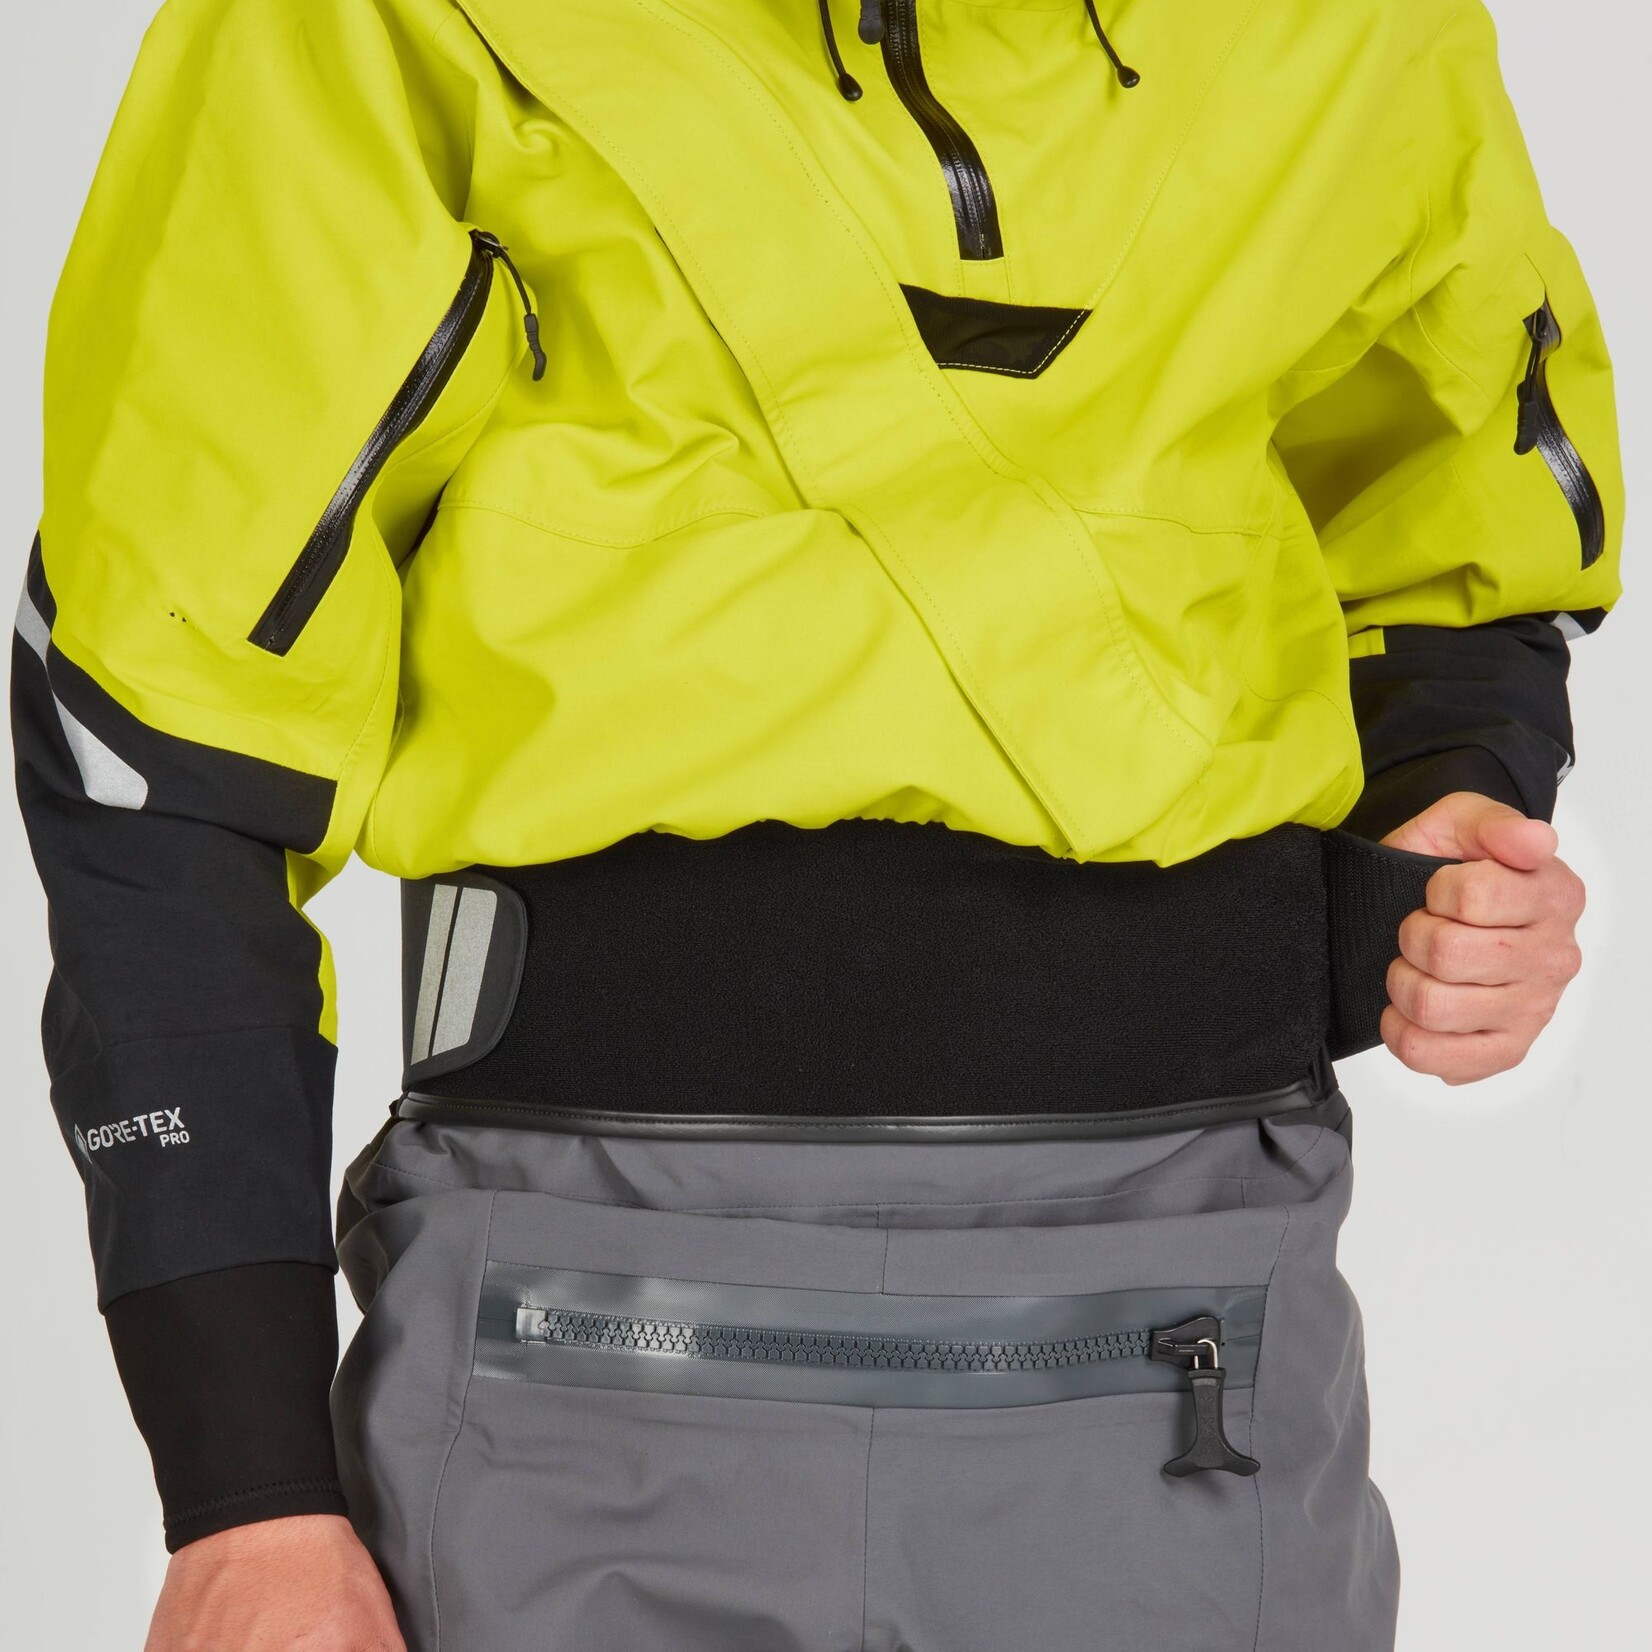 NRS - Men's Navigator GORE-TEX Pro Semi-Dry Suit